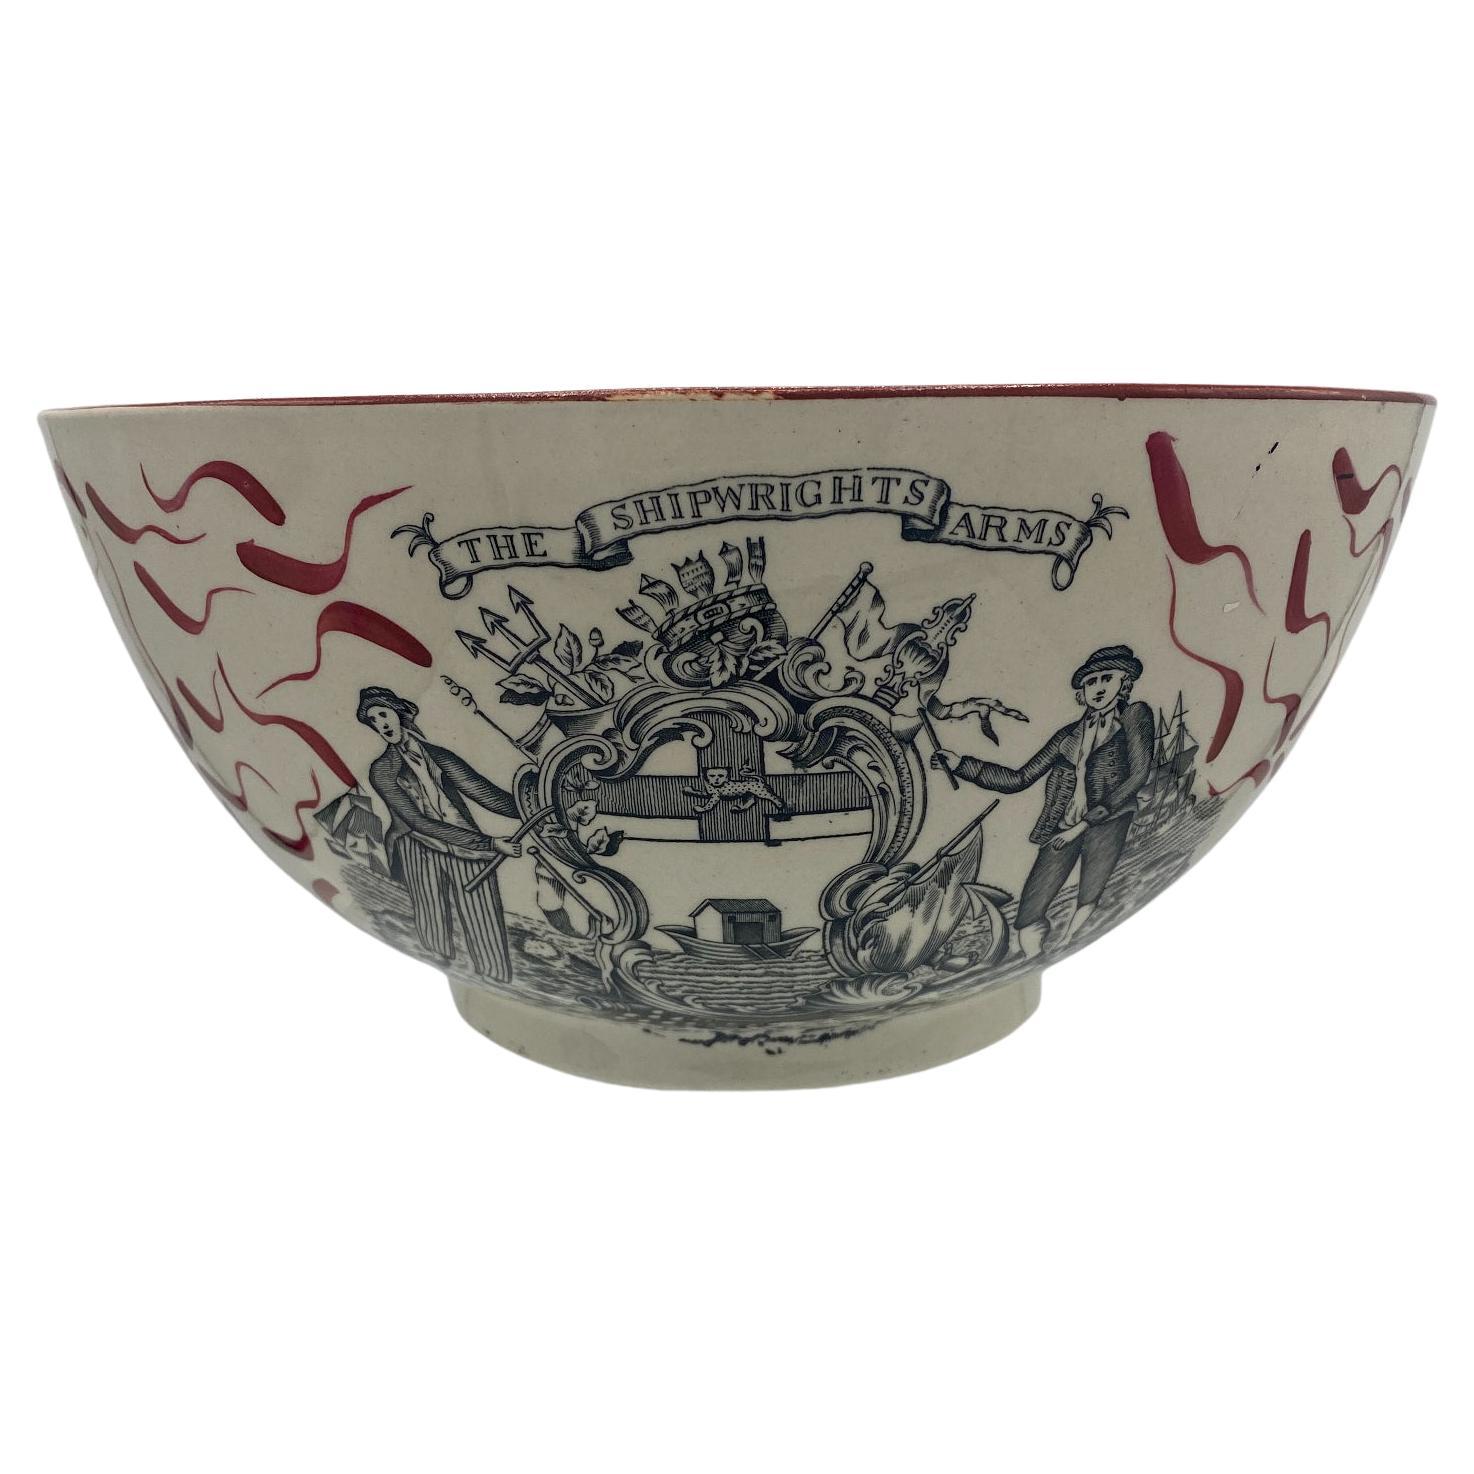 Late 19th Century Adams Pottery John Leach the Shipwrights Arms Ceramic Bowl